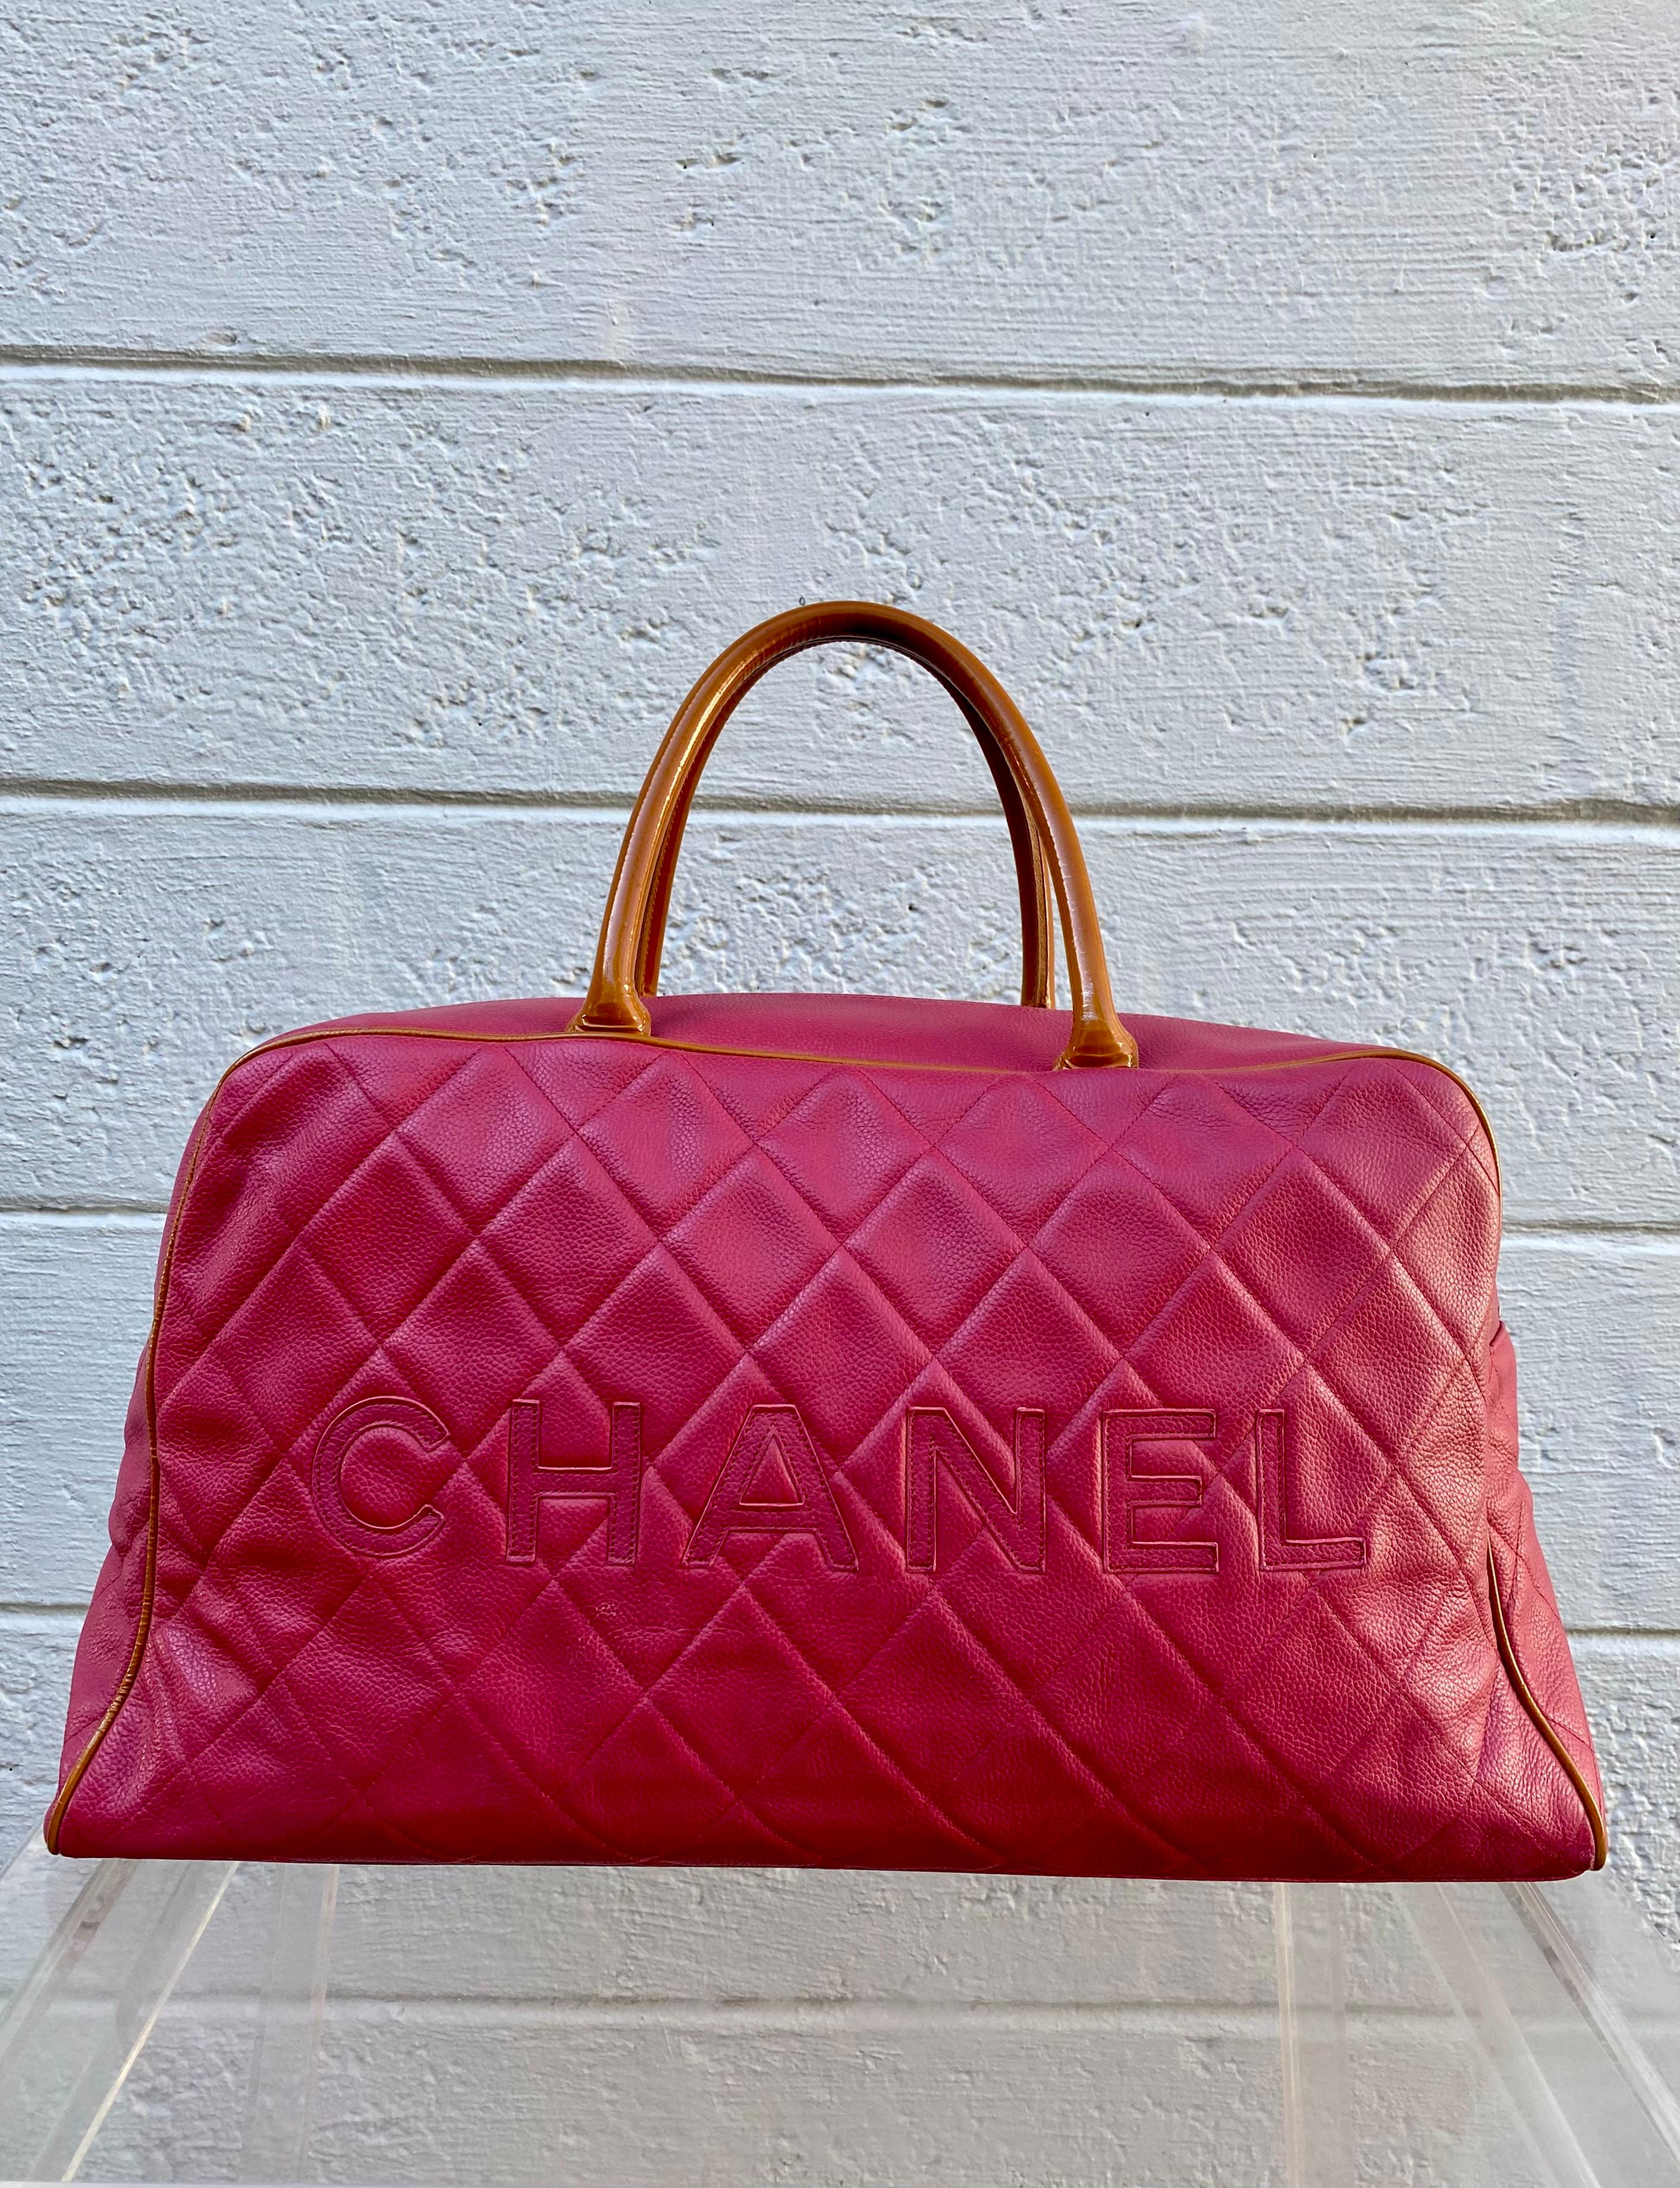 Chanel Rare Vintage Raspberry Pink Caviar Weekender Travel Duffle Shopper Bag For Sale 4